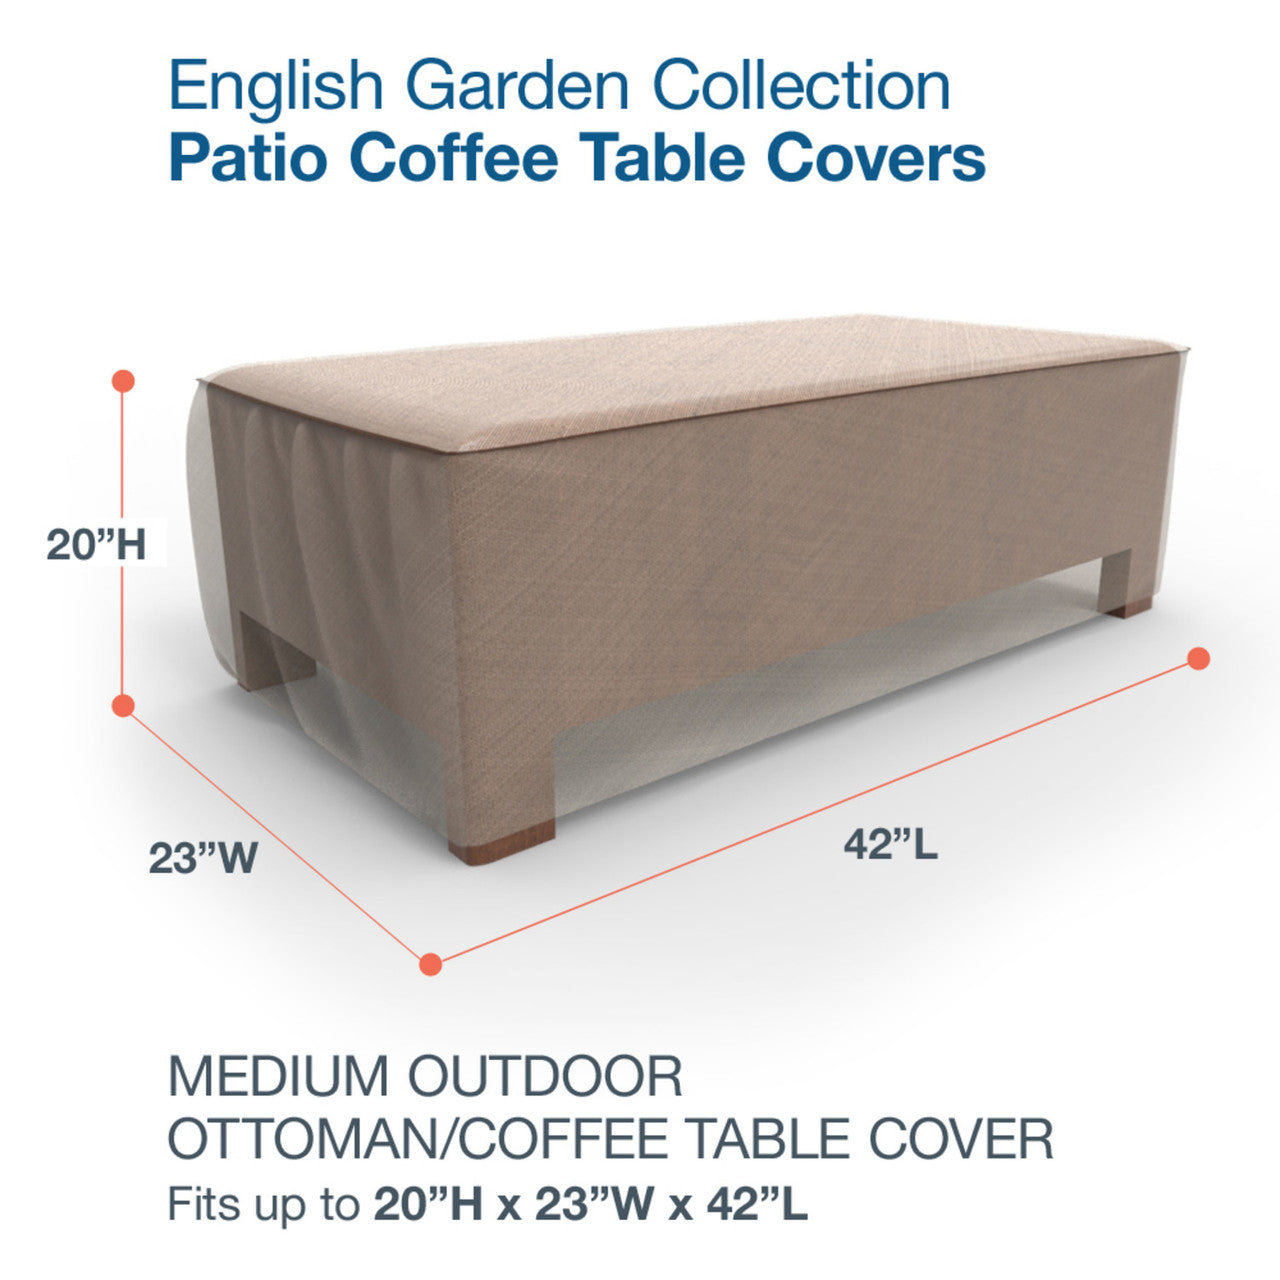 Budge Industries English Garden Patio Ottoman/Coffee Table Cover - Medium